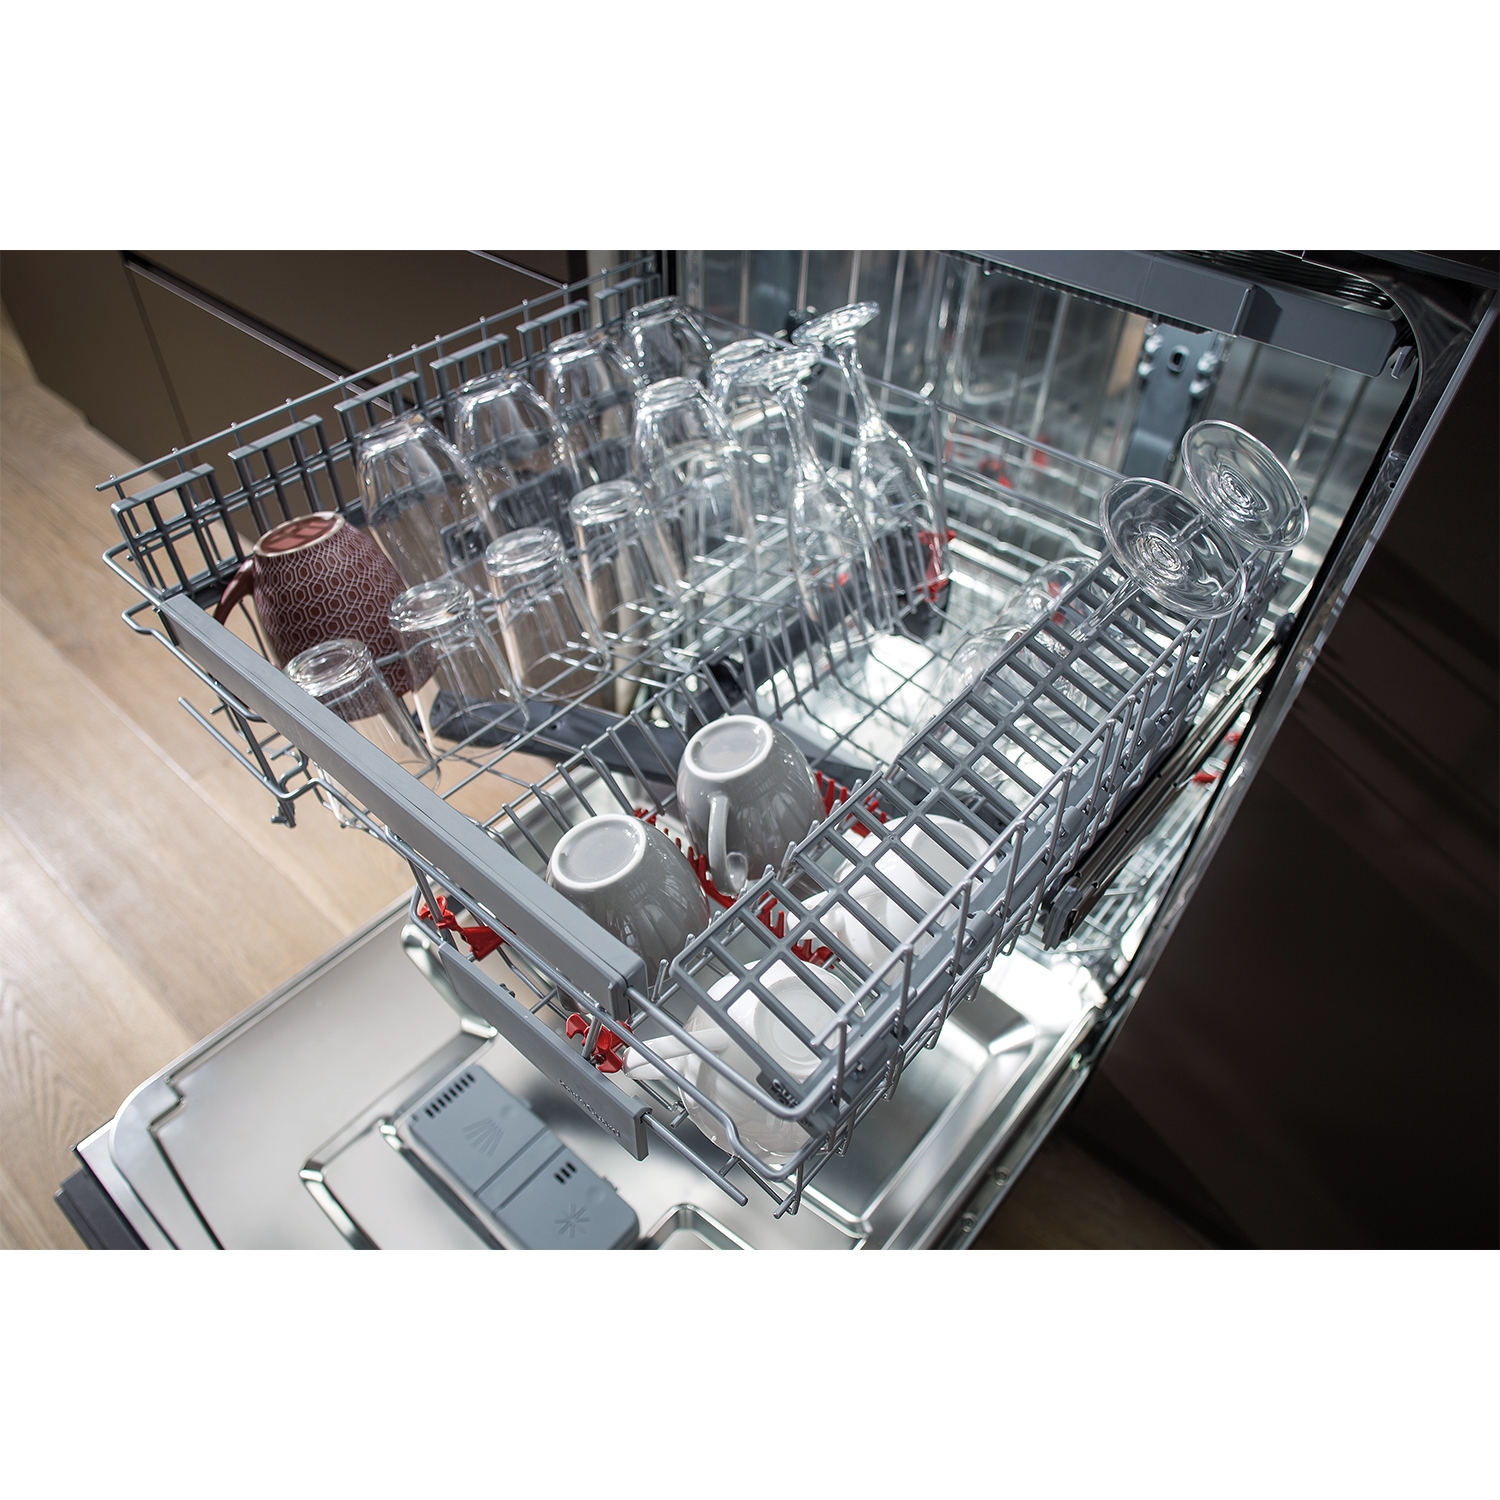 Hisense HV671C60UK Integrated Full Size Dishwasher - 16 Place Settings - 4